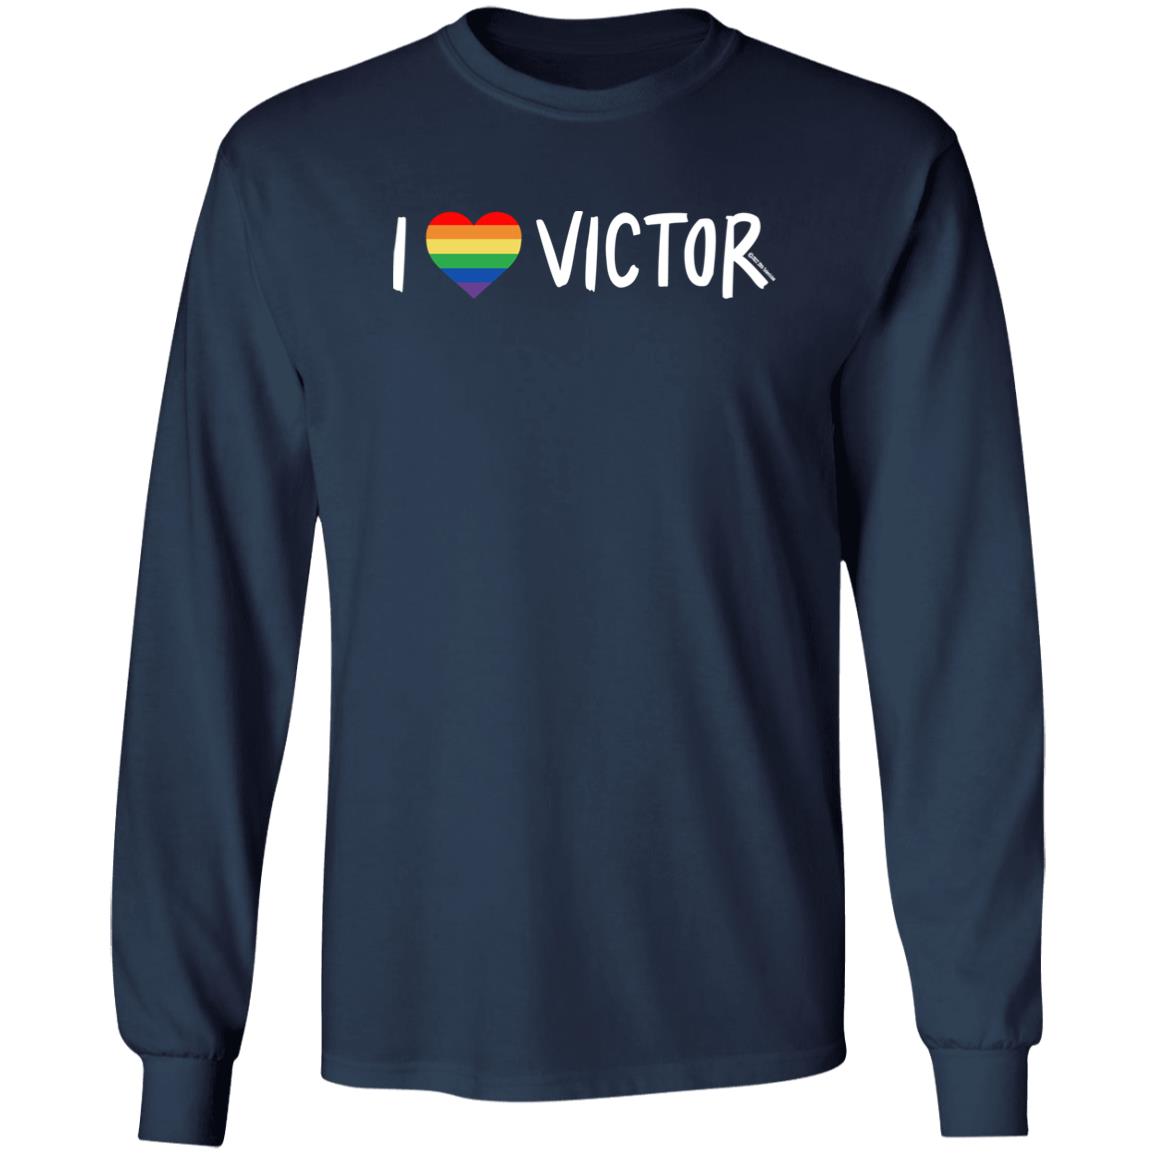 I Love Victor Shirt Hulu Shop LoveVictorHulu